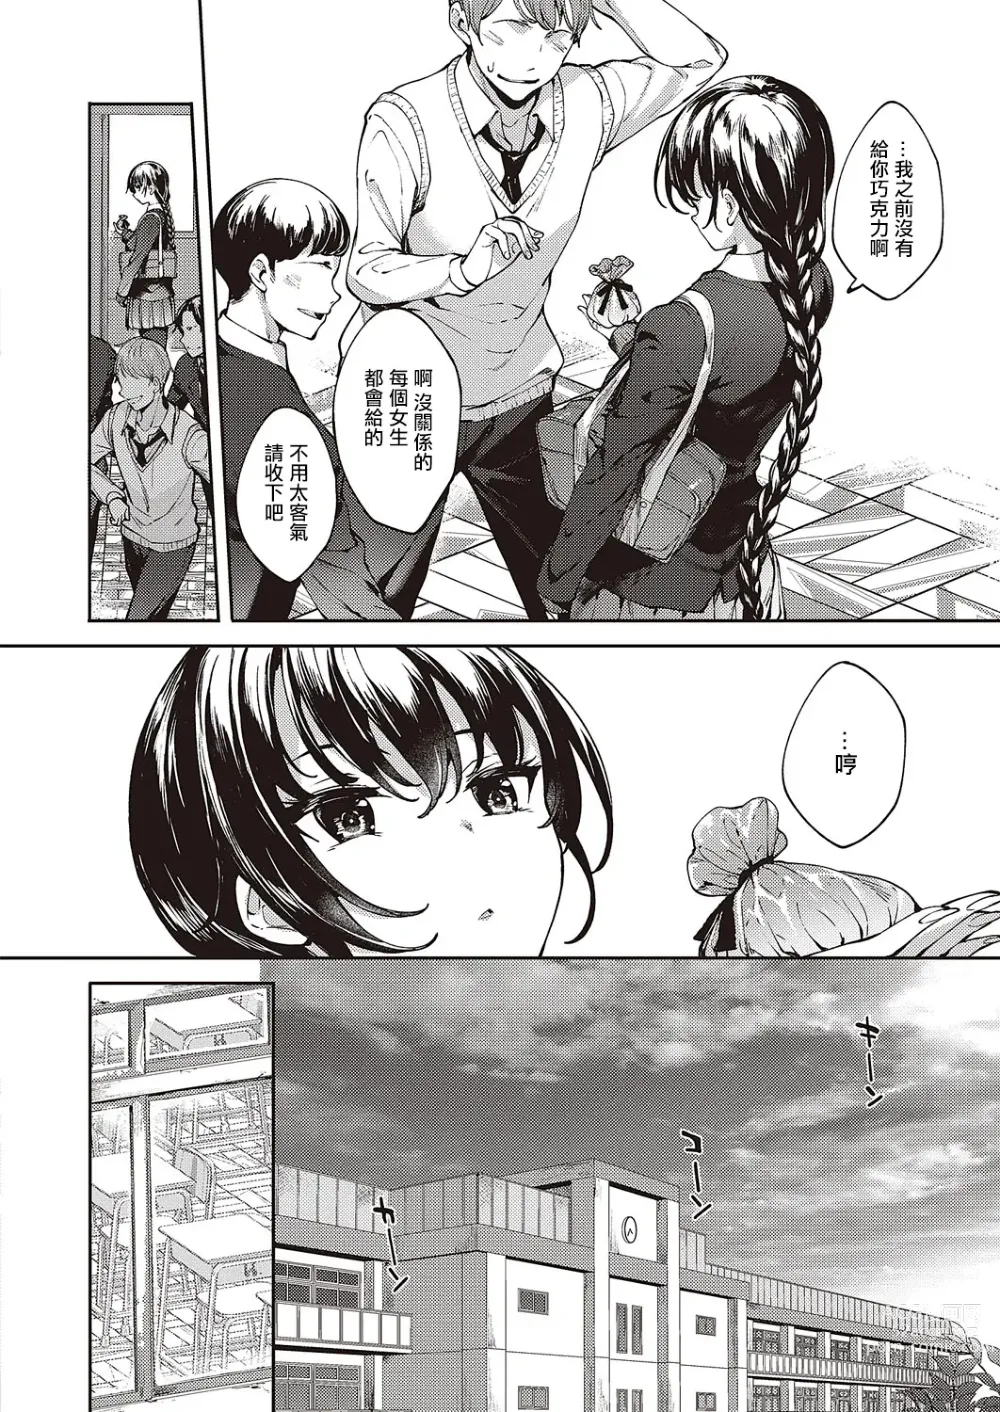 Page 4 of manga めぐりどころ 2歩